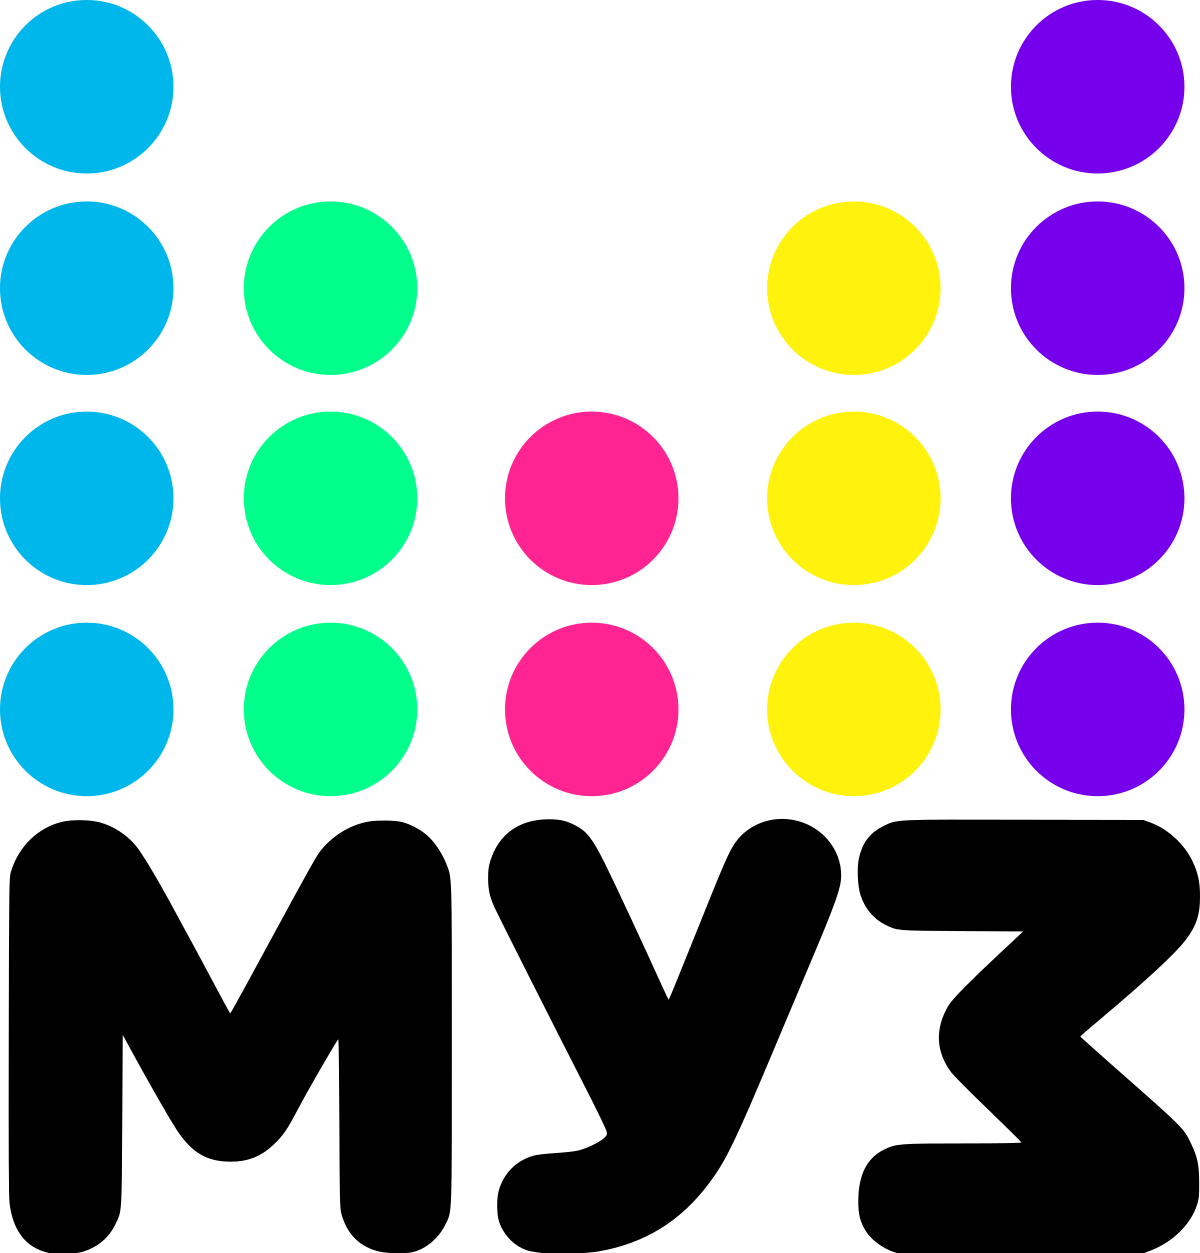 Файл:Муз-ТВ 2015.svg — Википедия